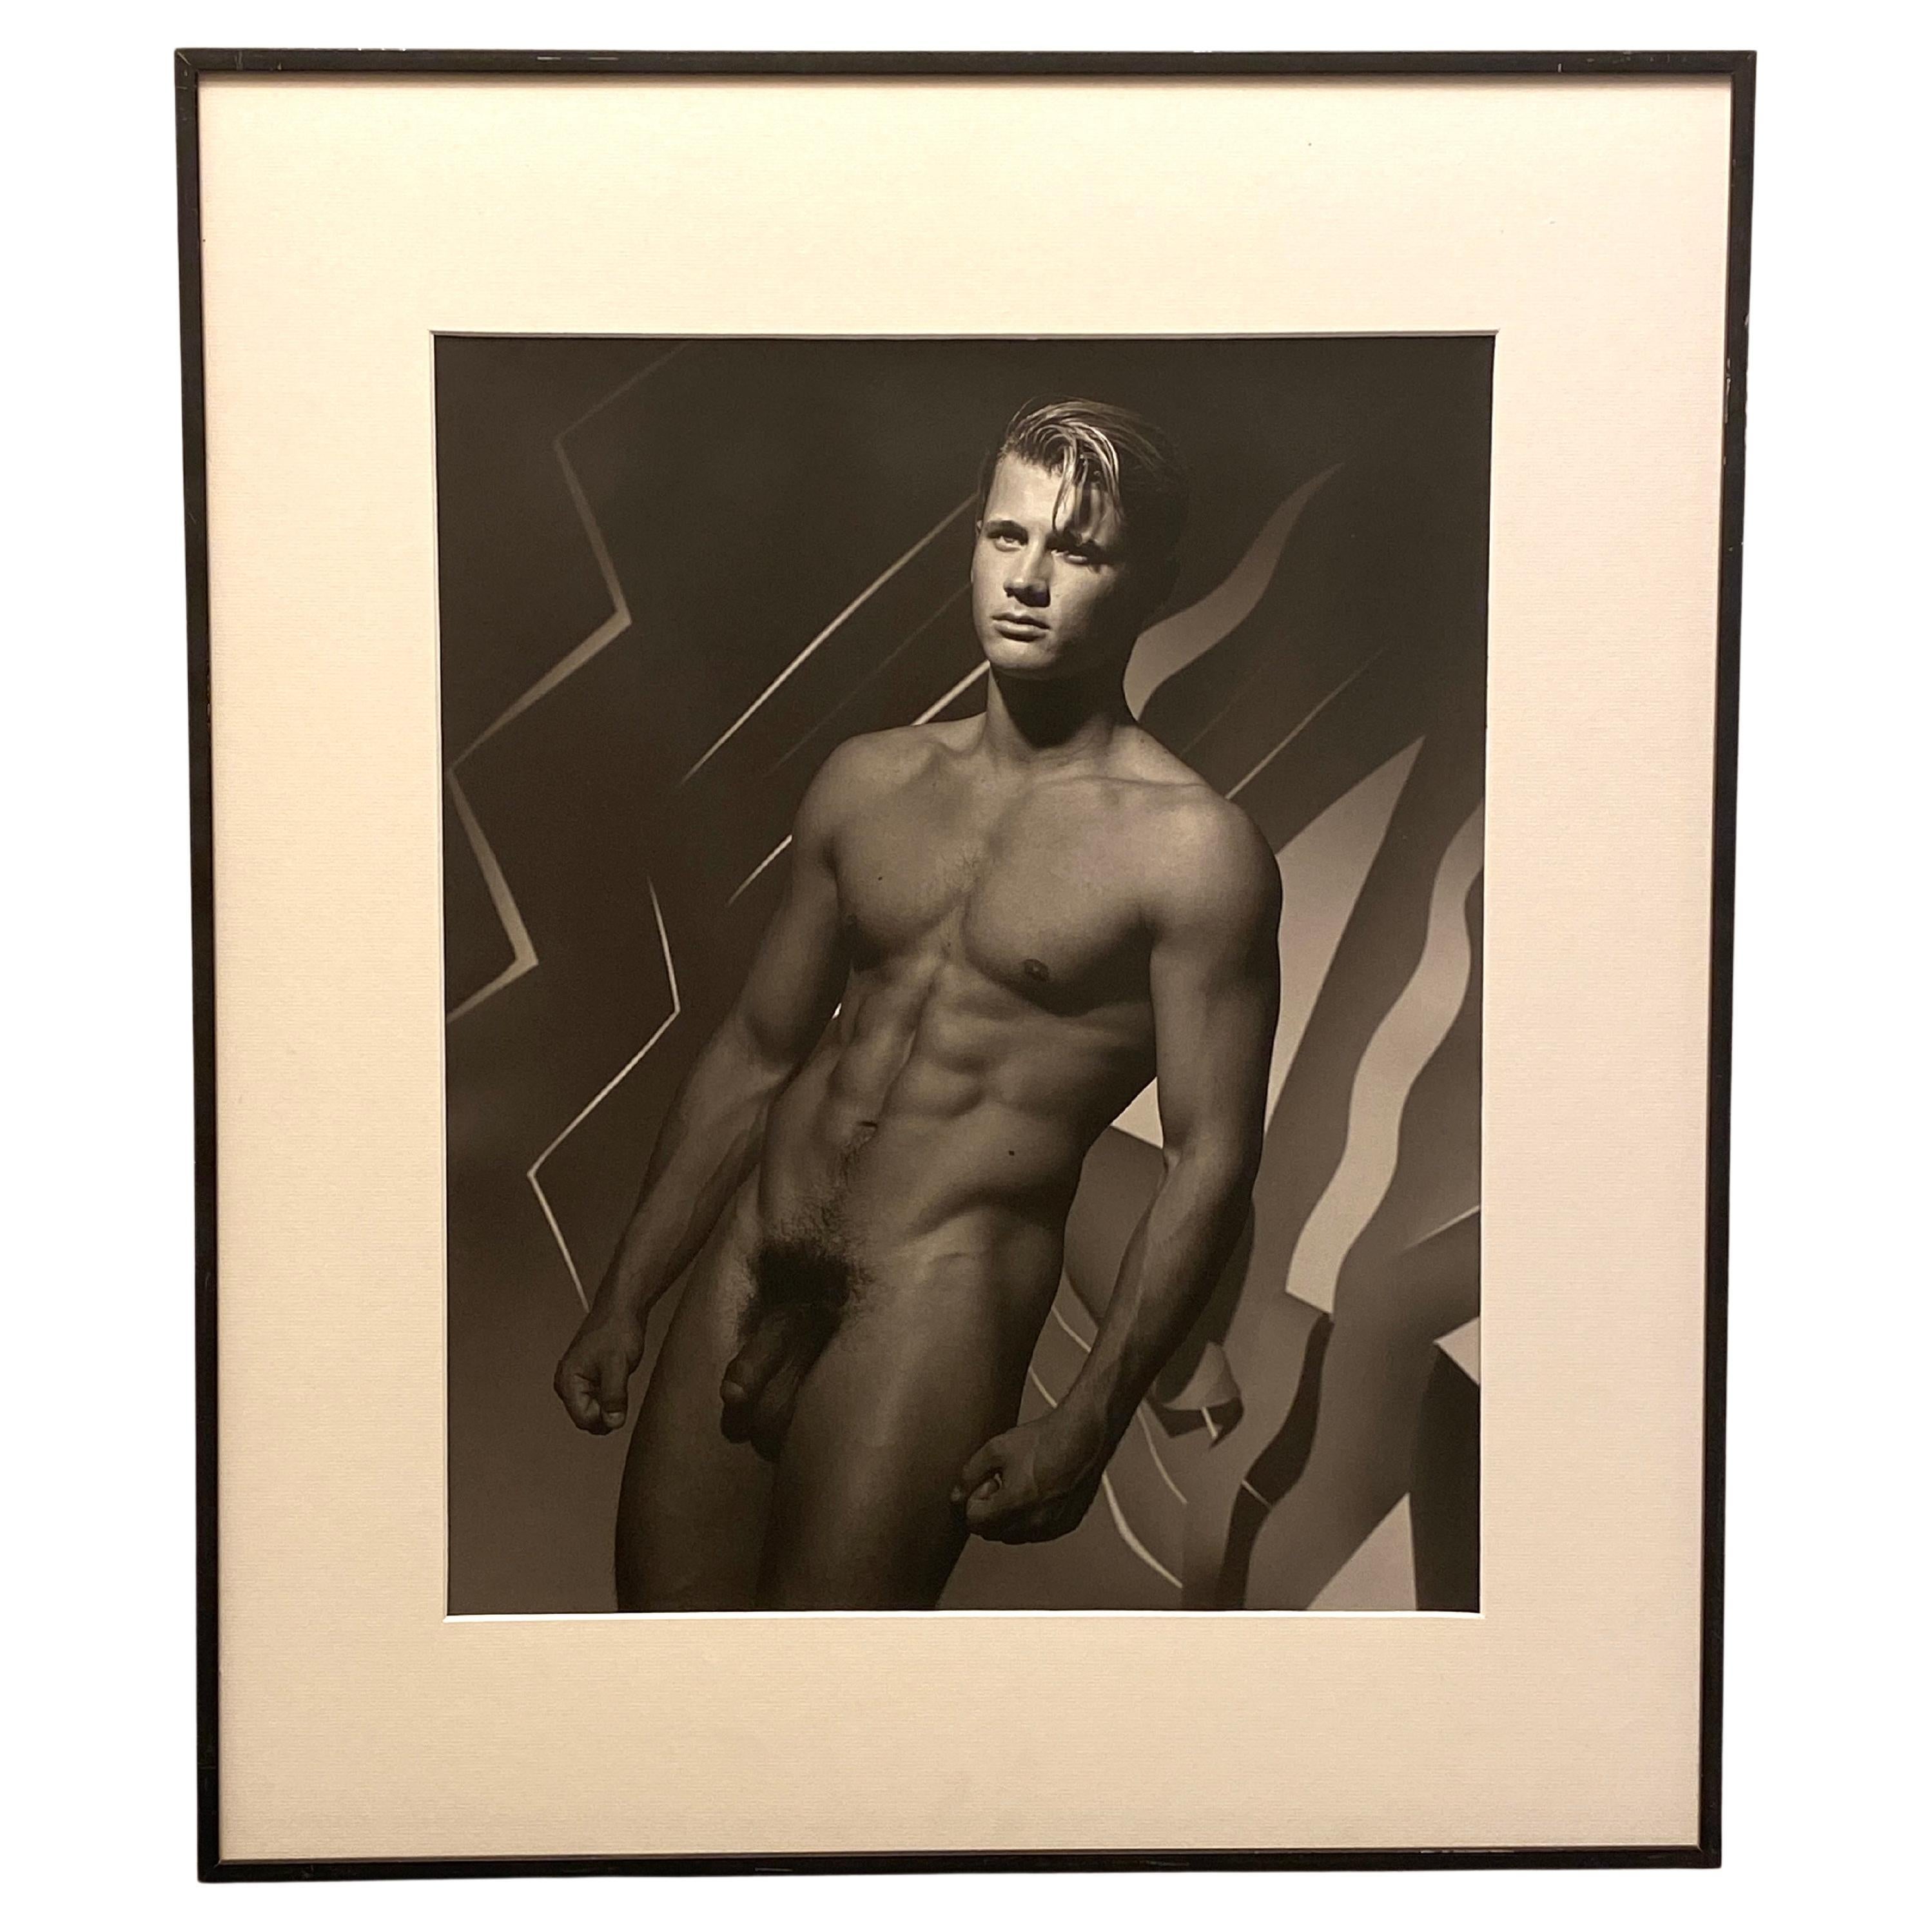 Michael Roberts Original Photograph "Michel Nude" Hamilton's London, 1989